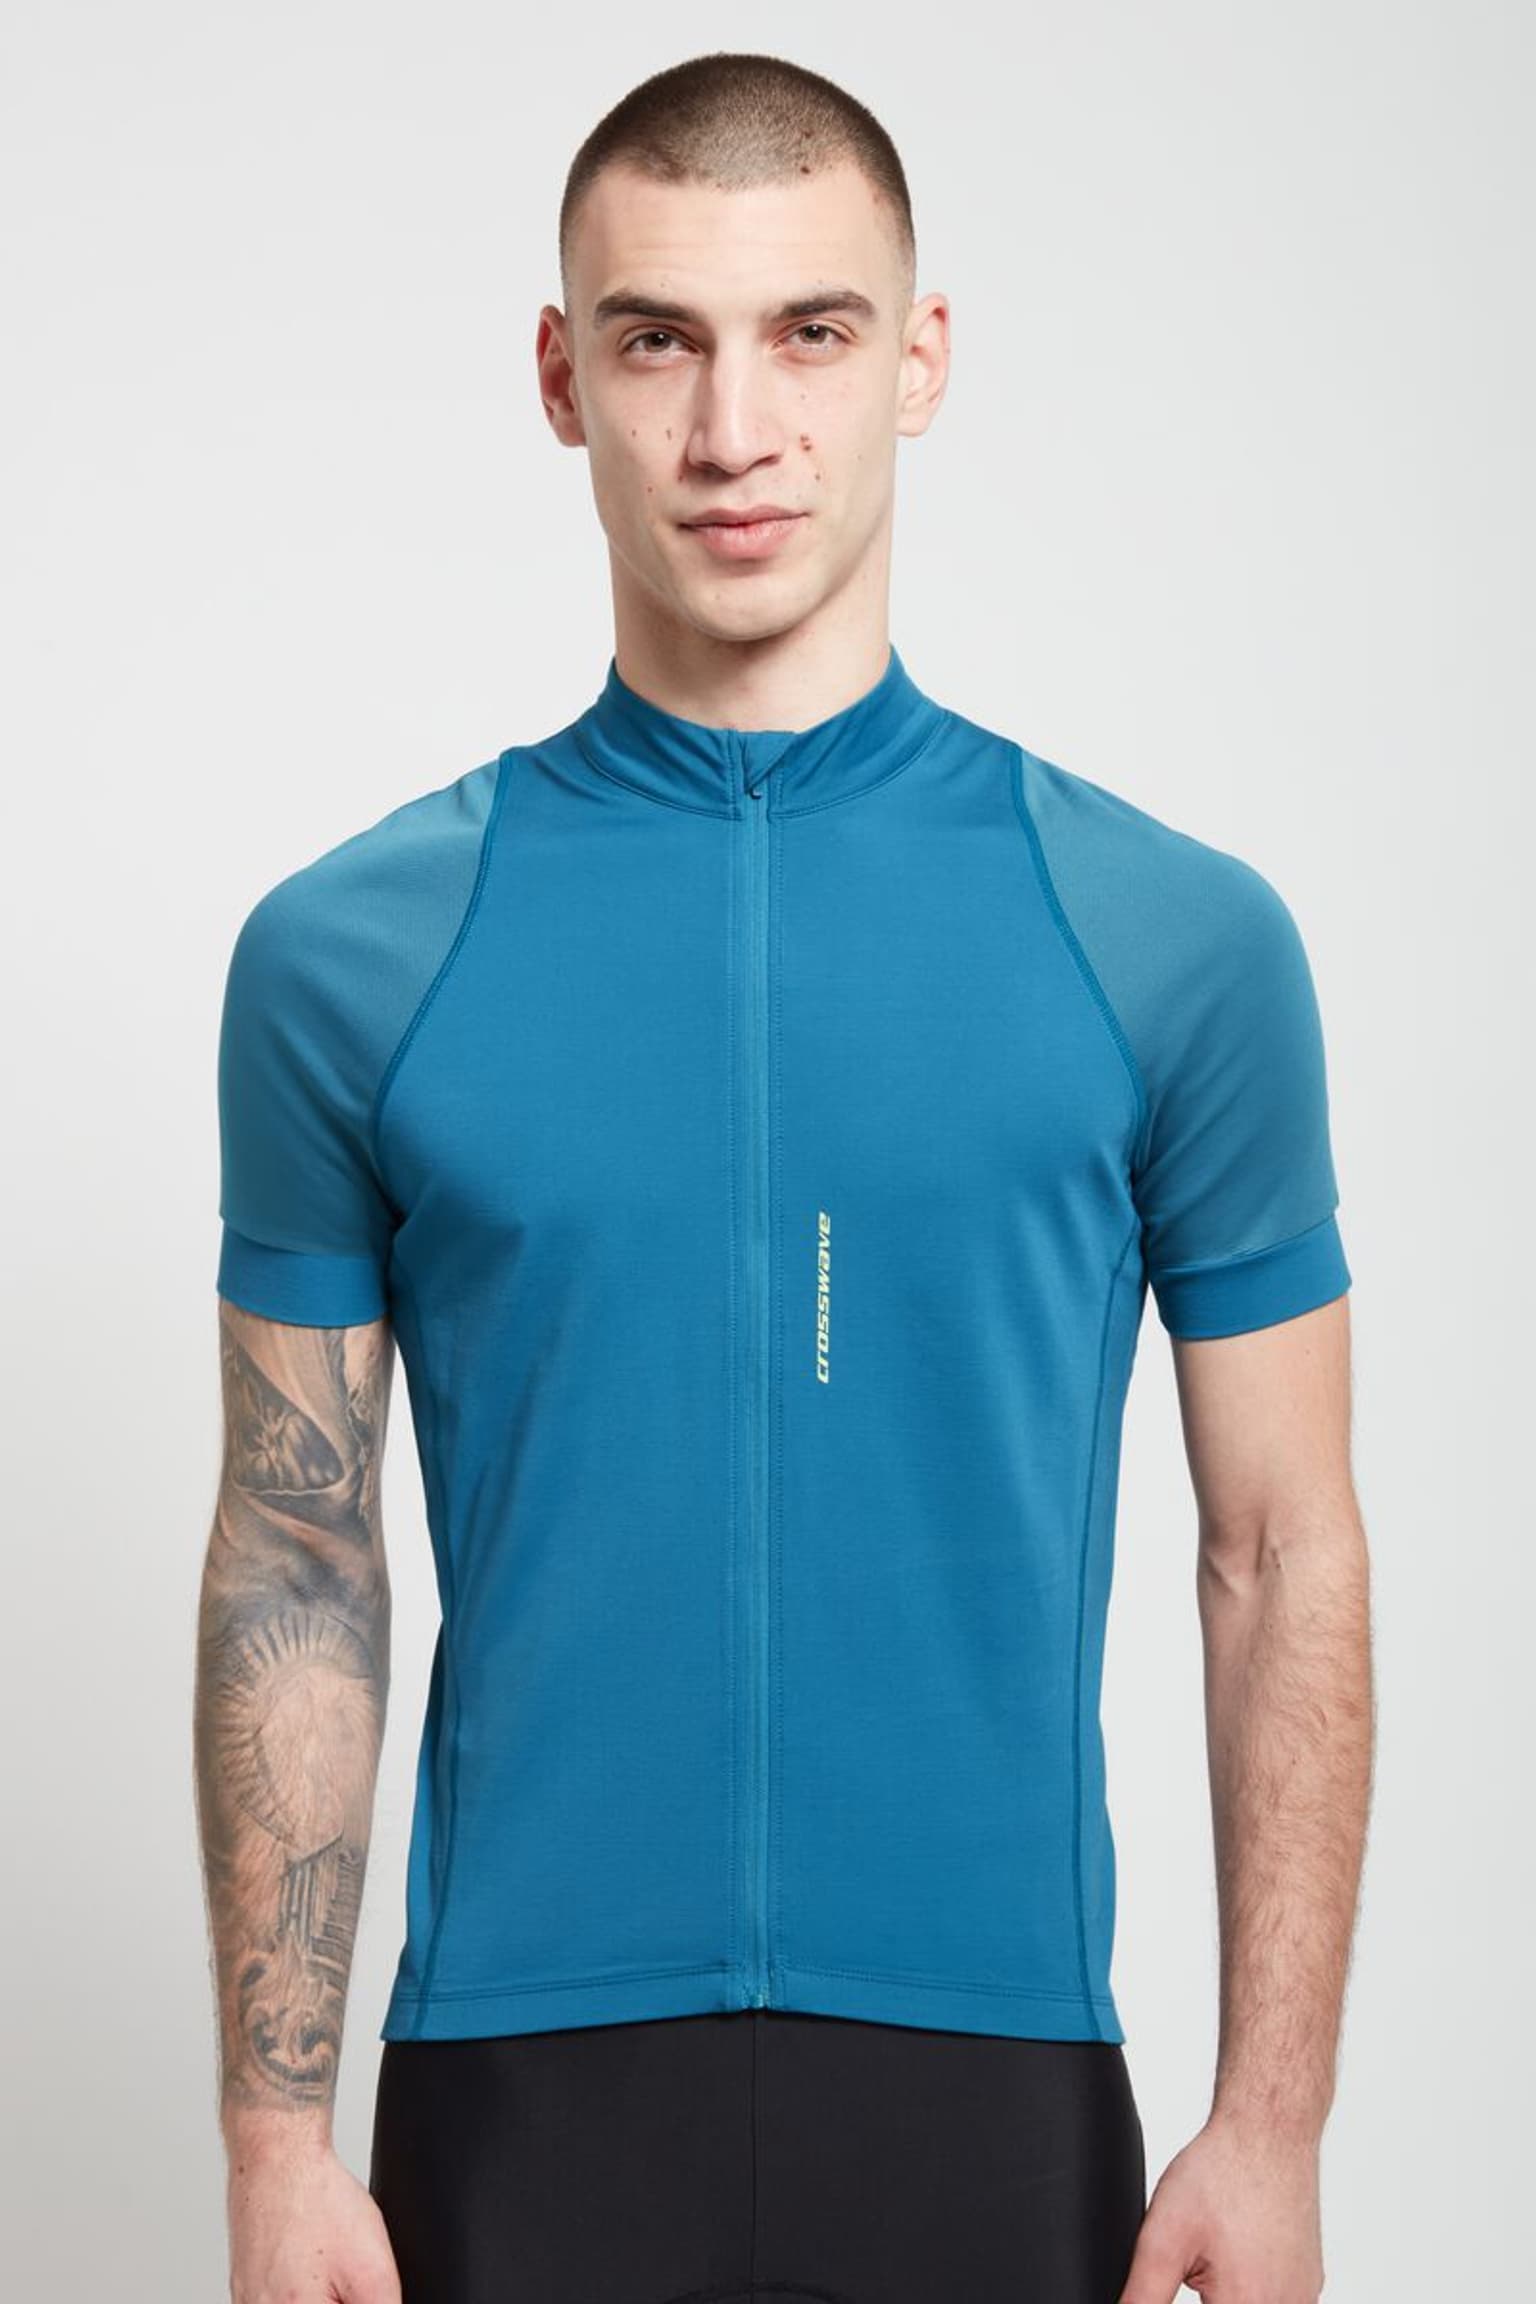 Crosswave Crosswave Full Zip Shirt Edis Maglietta da bici blu-marino 1